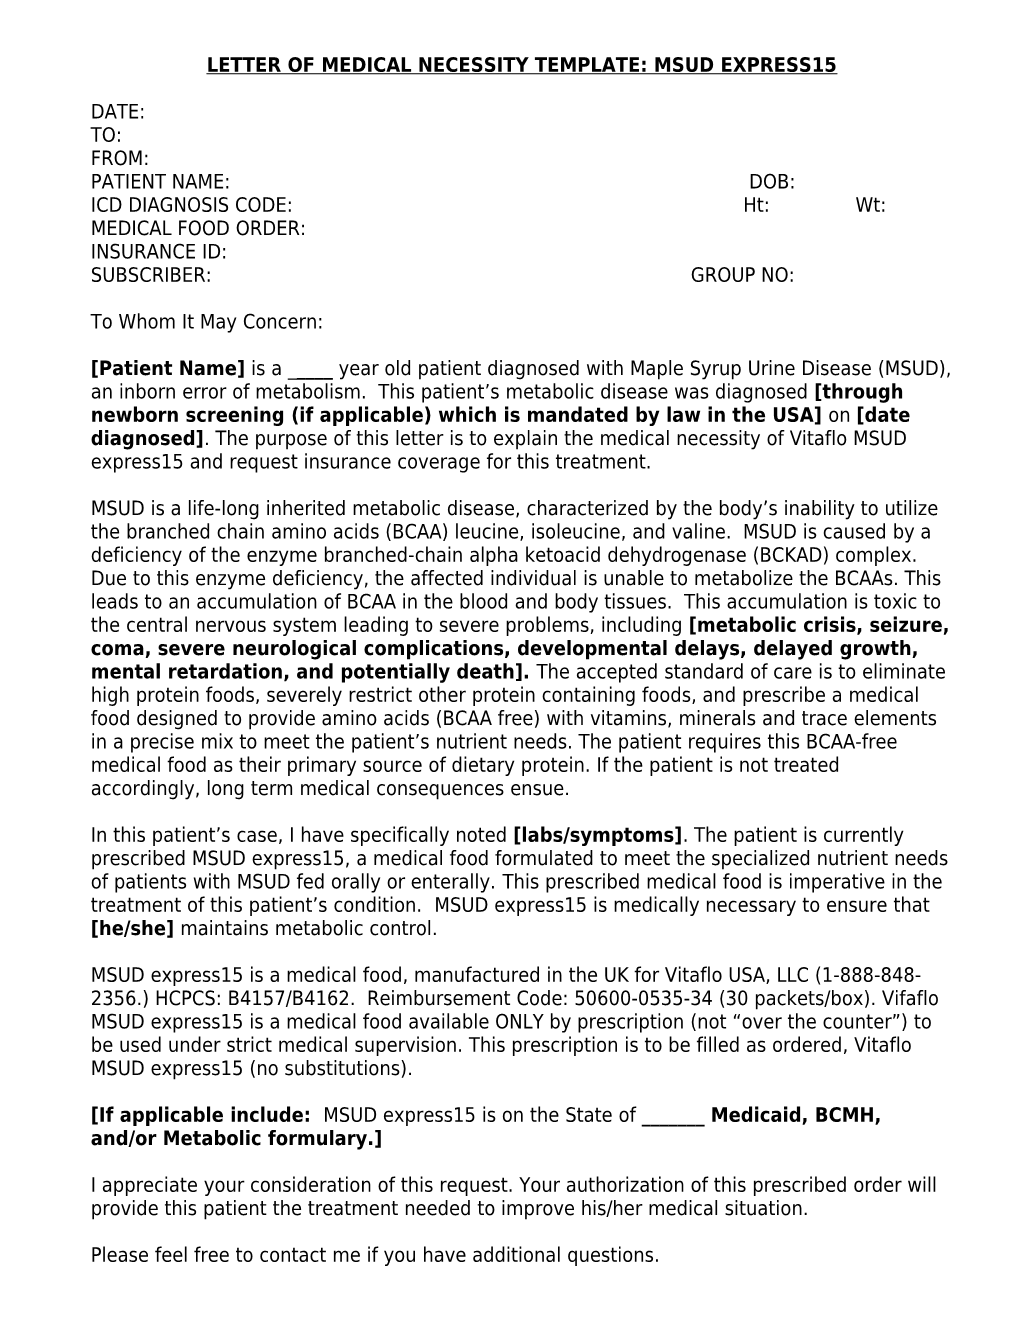 Letter of Medical Necessitytemplate: Msudexpress15